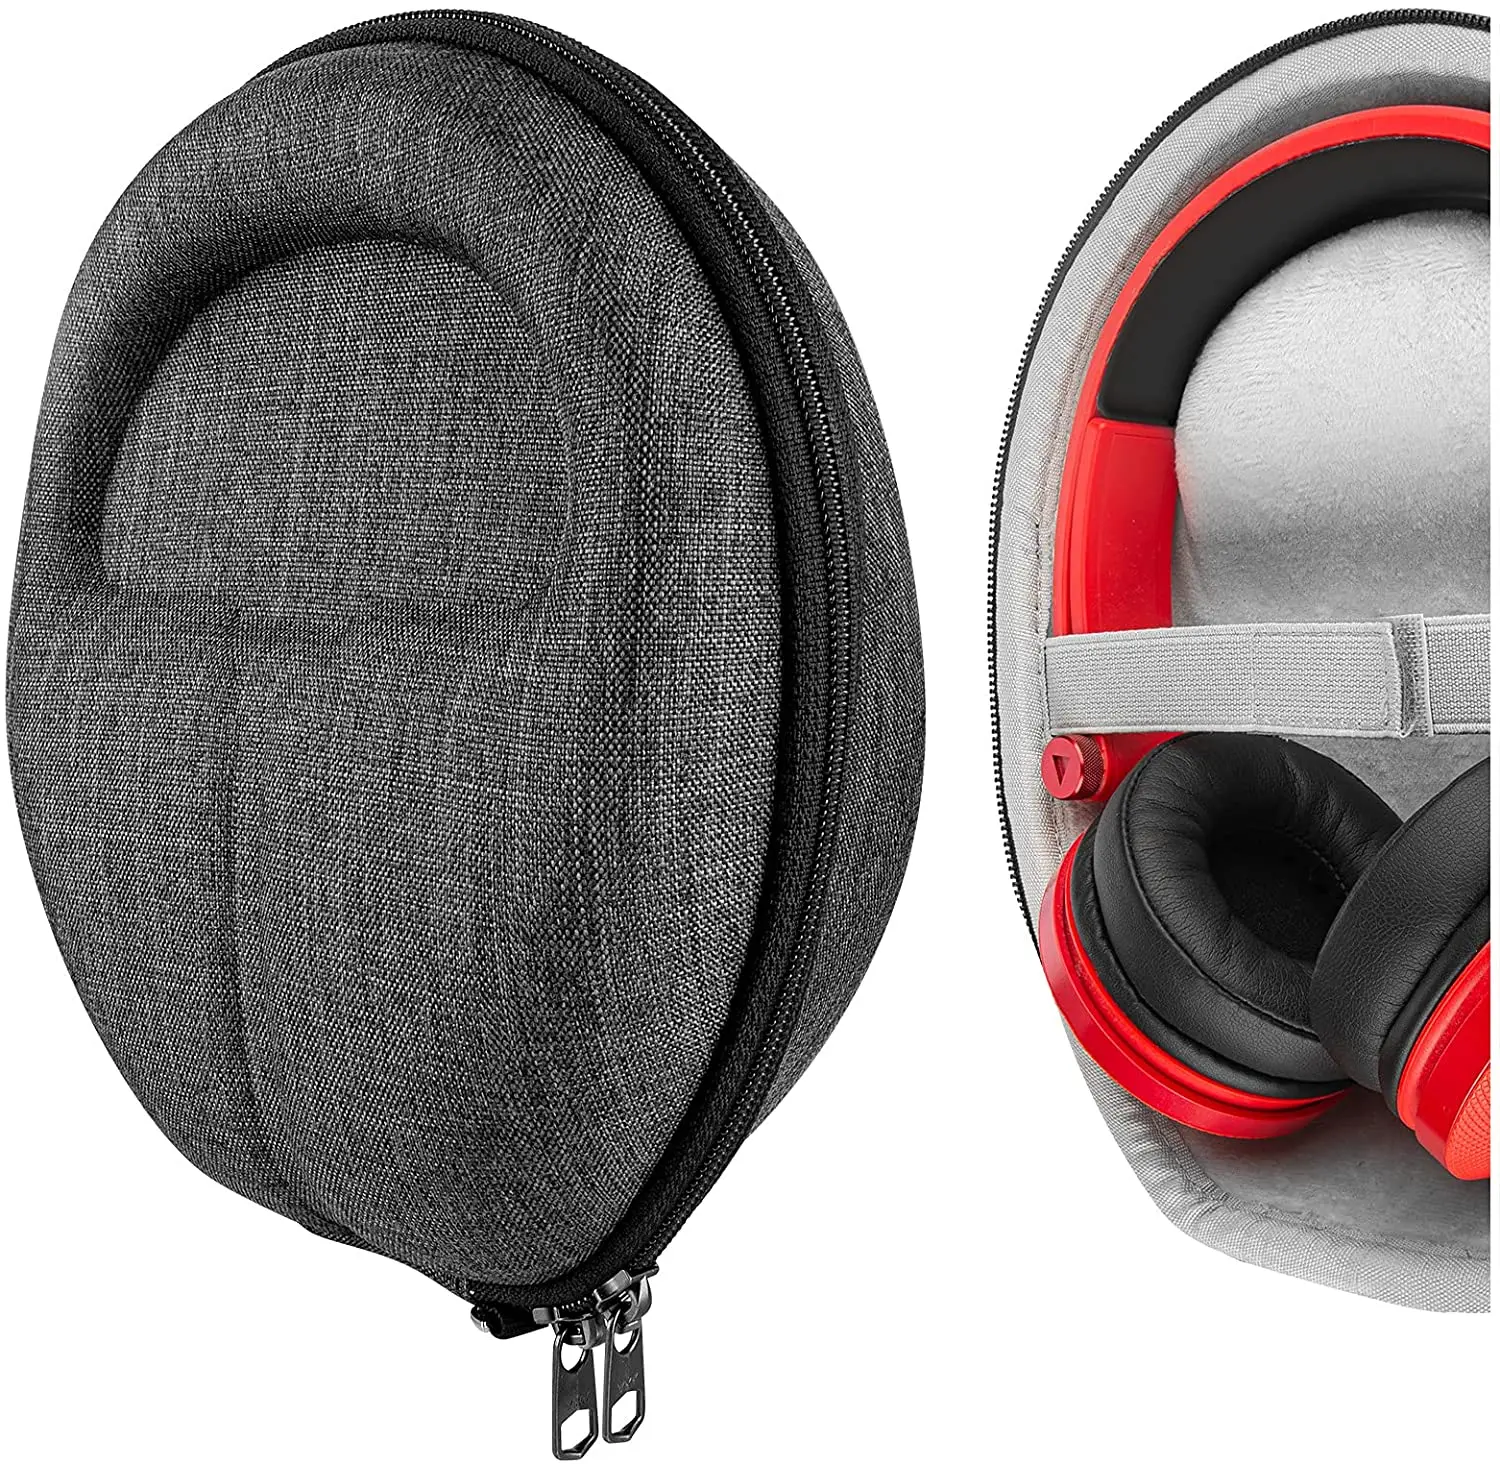 Enlarge Geekria Kids Headphones Case for Lay Flat On-Ear Headphone,Hard Portable Bluetooth Earphones Headset Bag for Accessories Storage